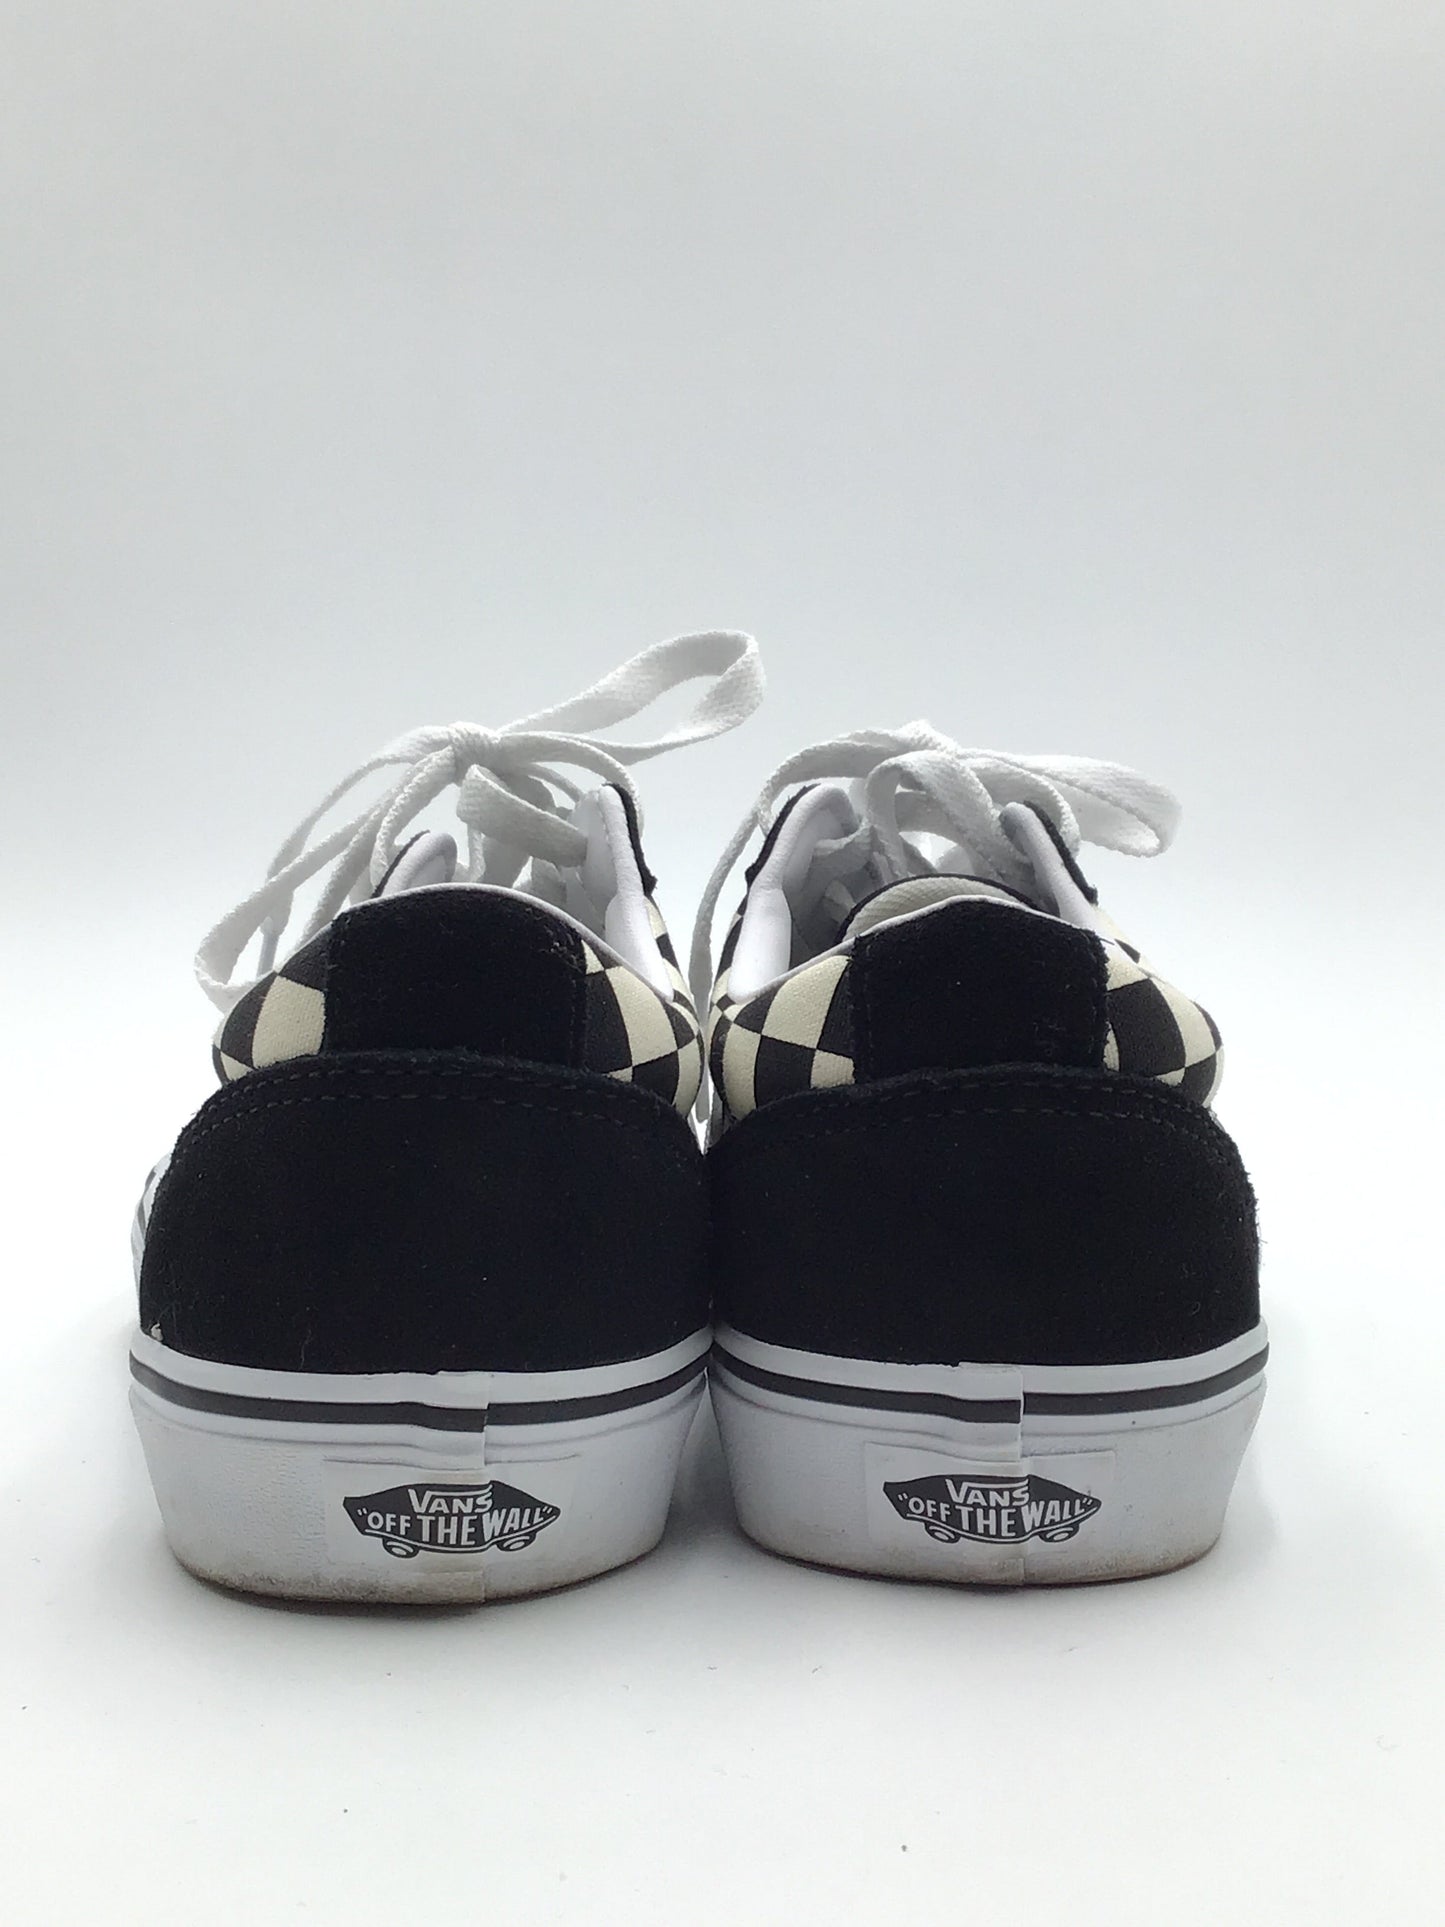 Black & White Shoes Sneakers Vans, Size 8